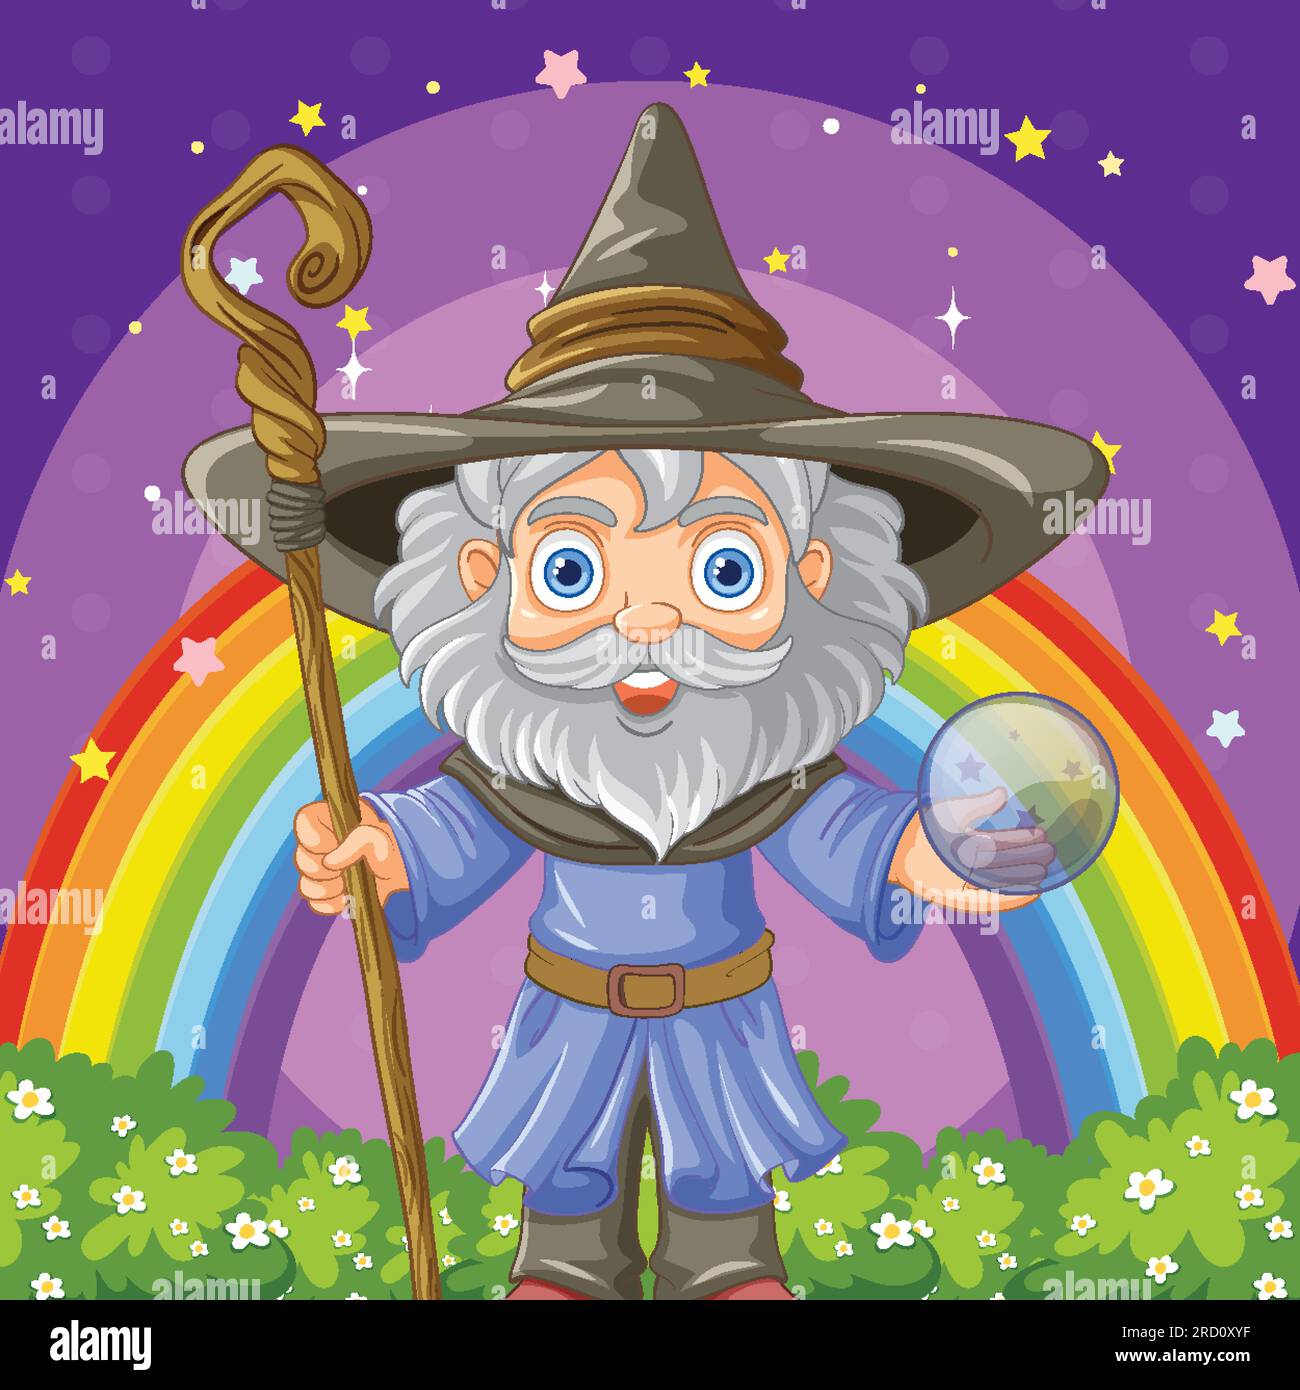 Cute Old Wizard Cartoon Character illustration Stock Vector